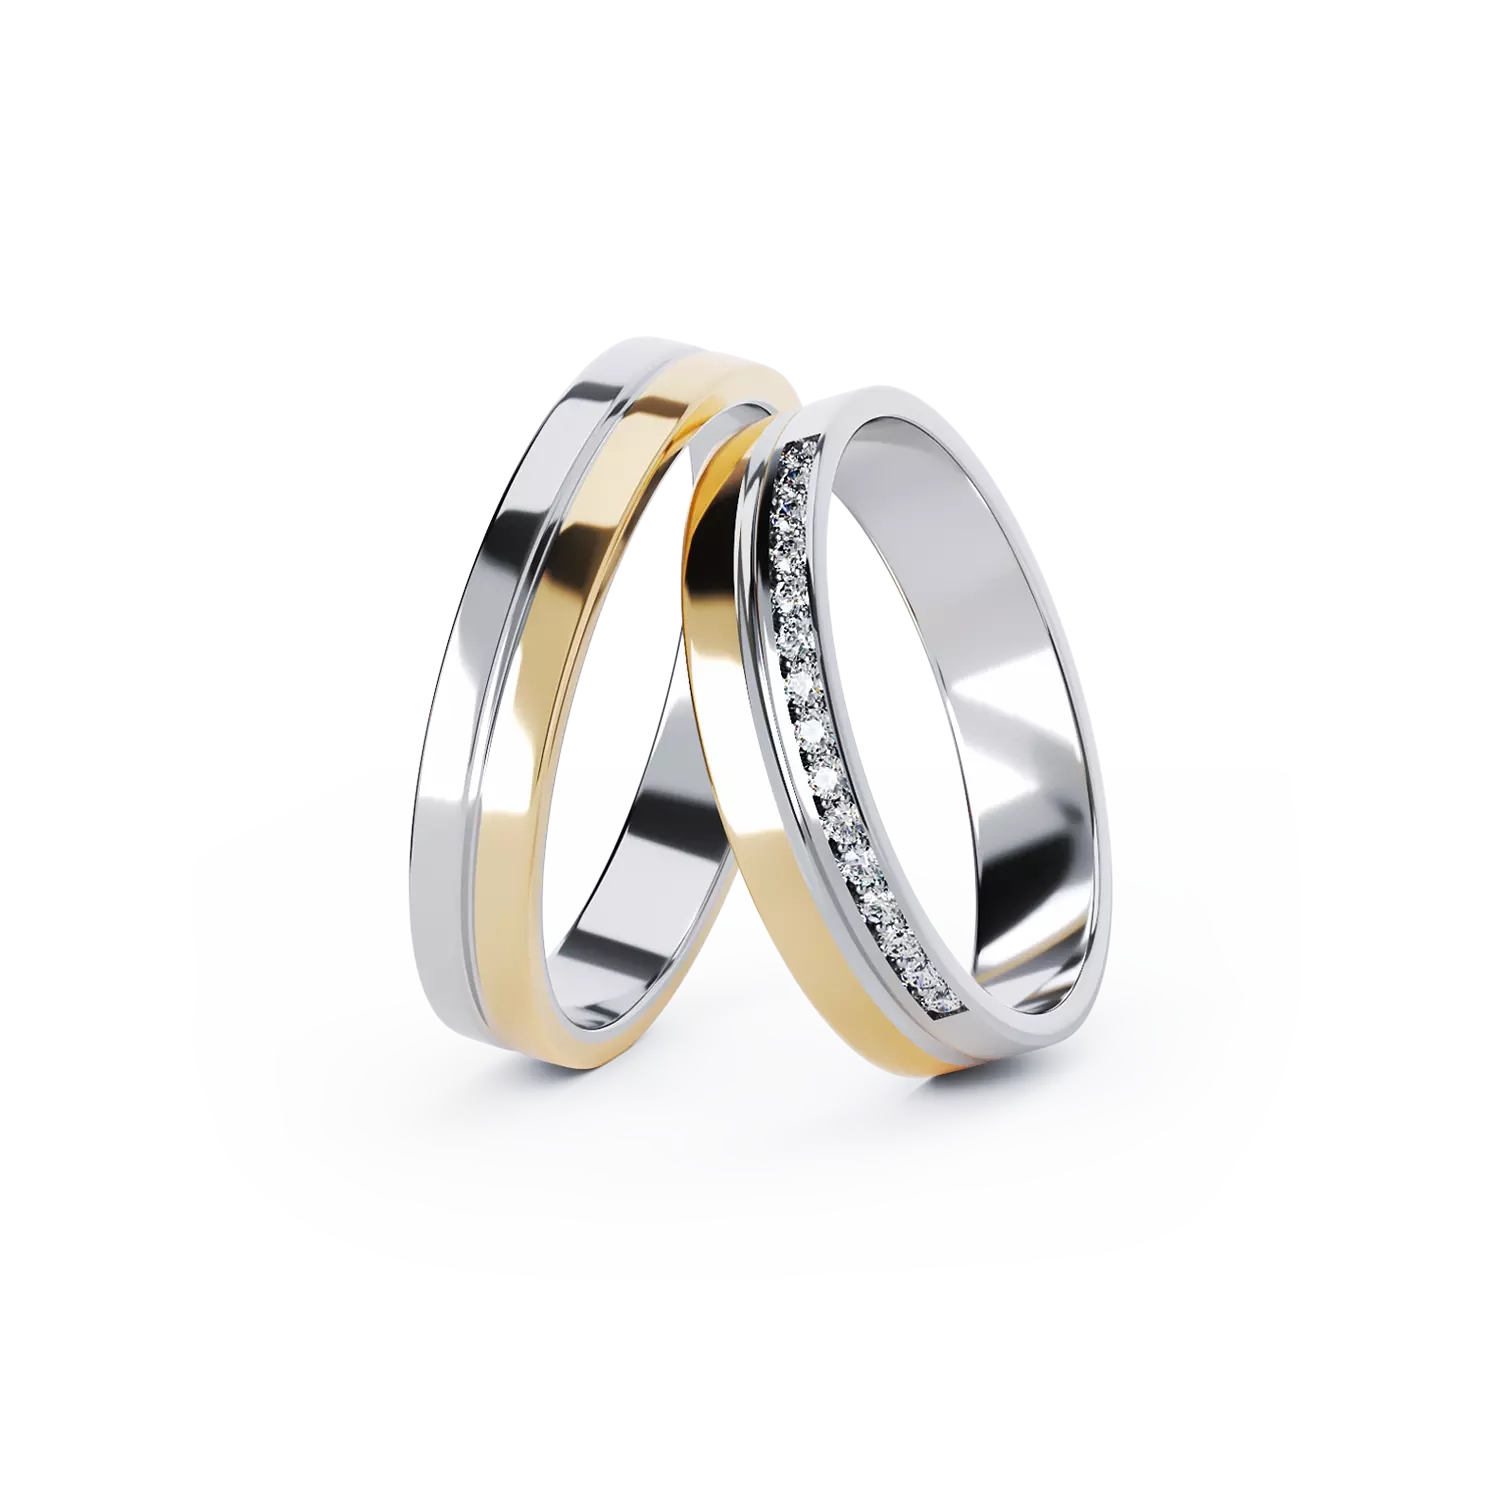 TEI-COEUR arany jegygyűrű